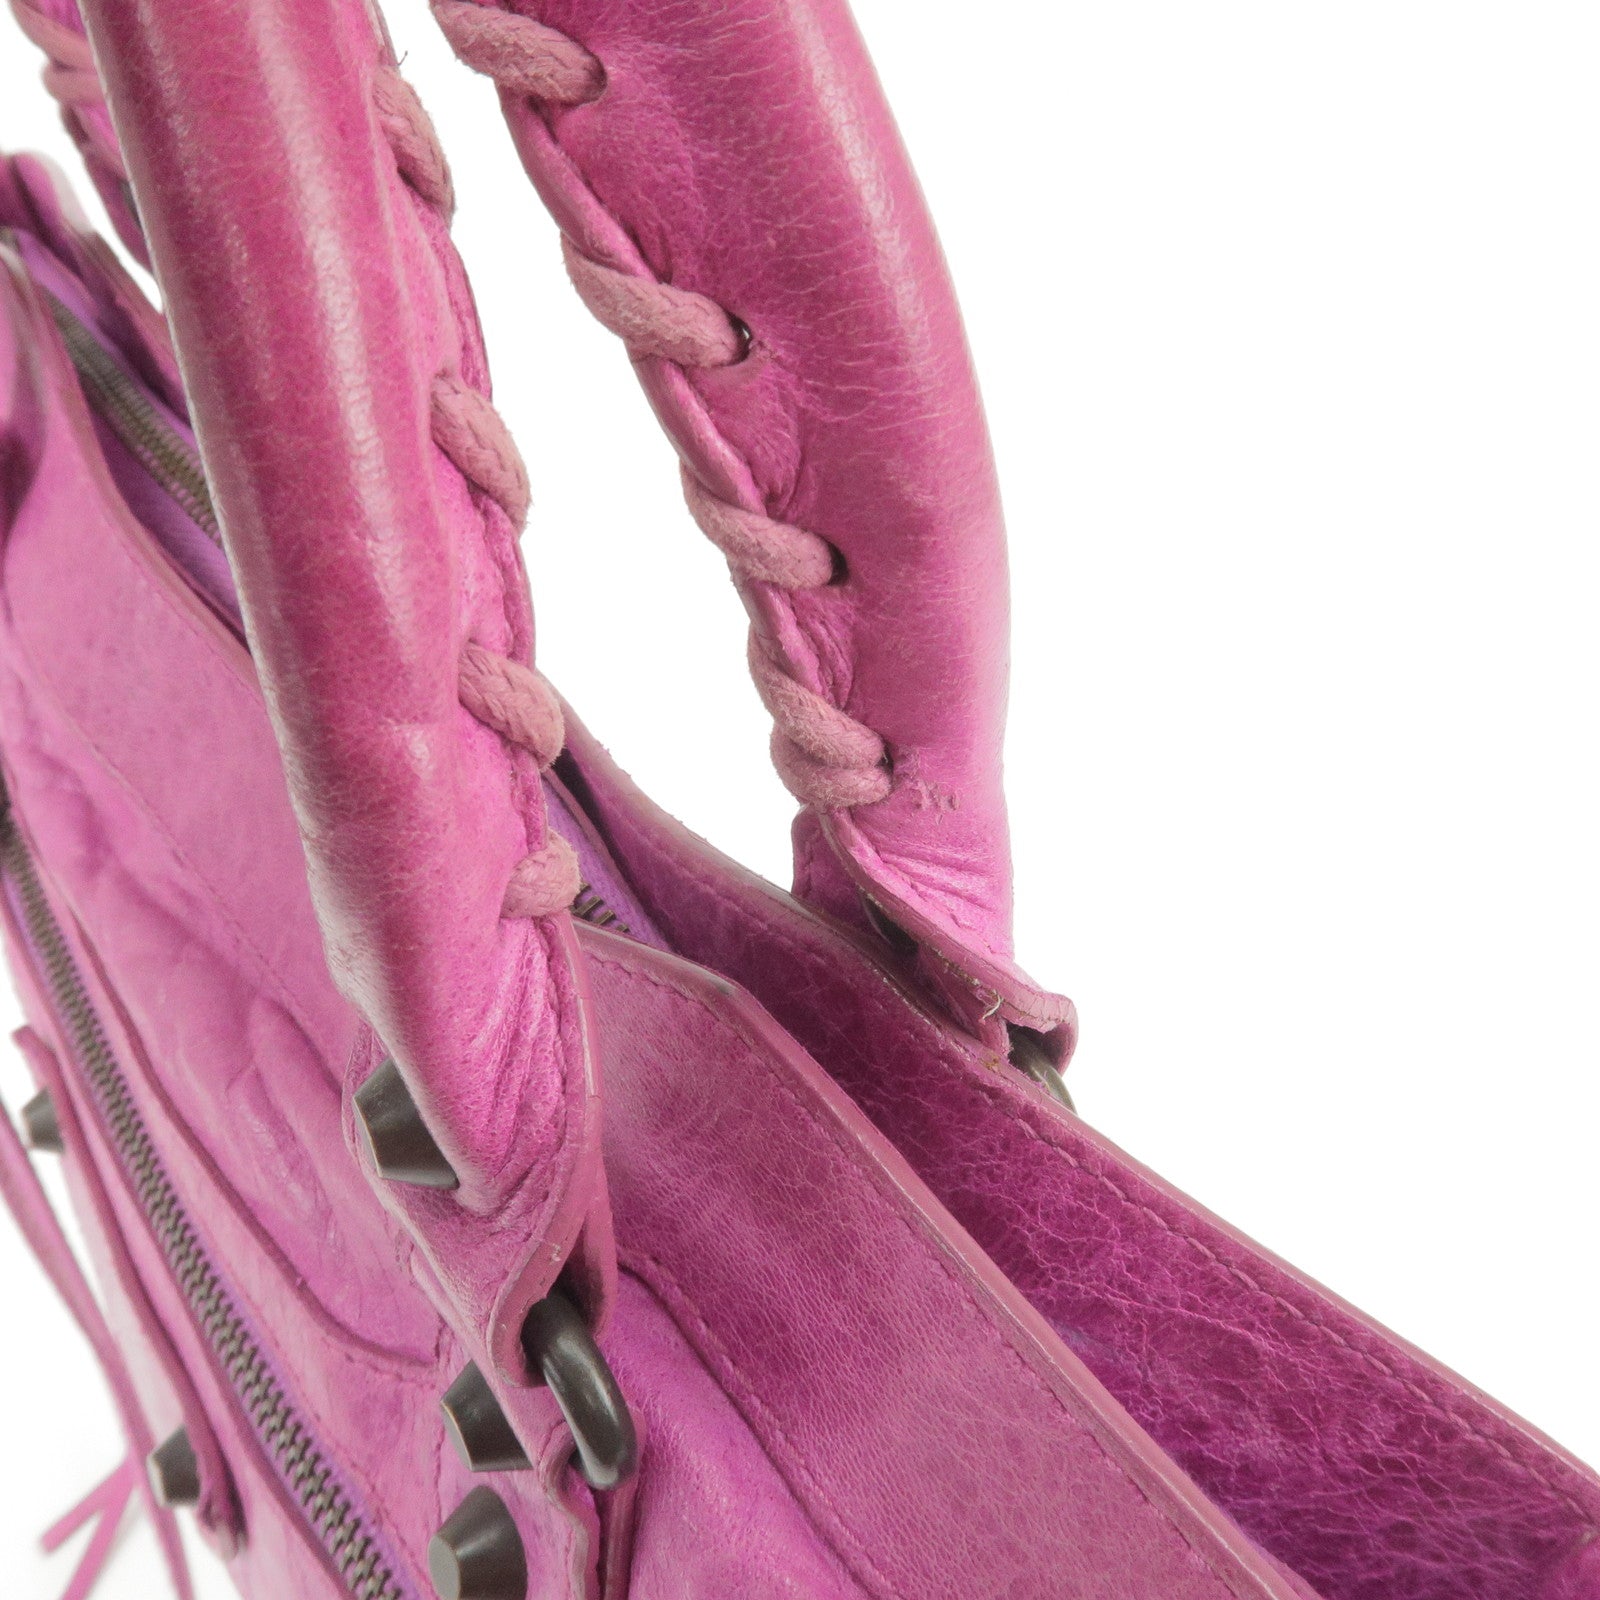 Buy Pre-Owned BALENCIAGA City Bag Mini Pink Washed Lambskin